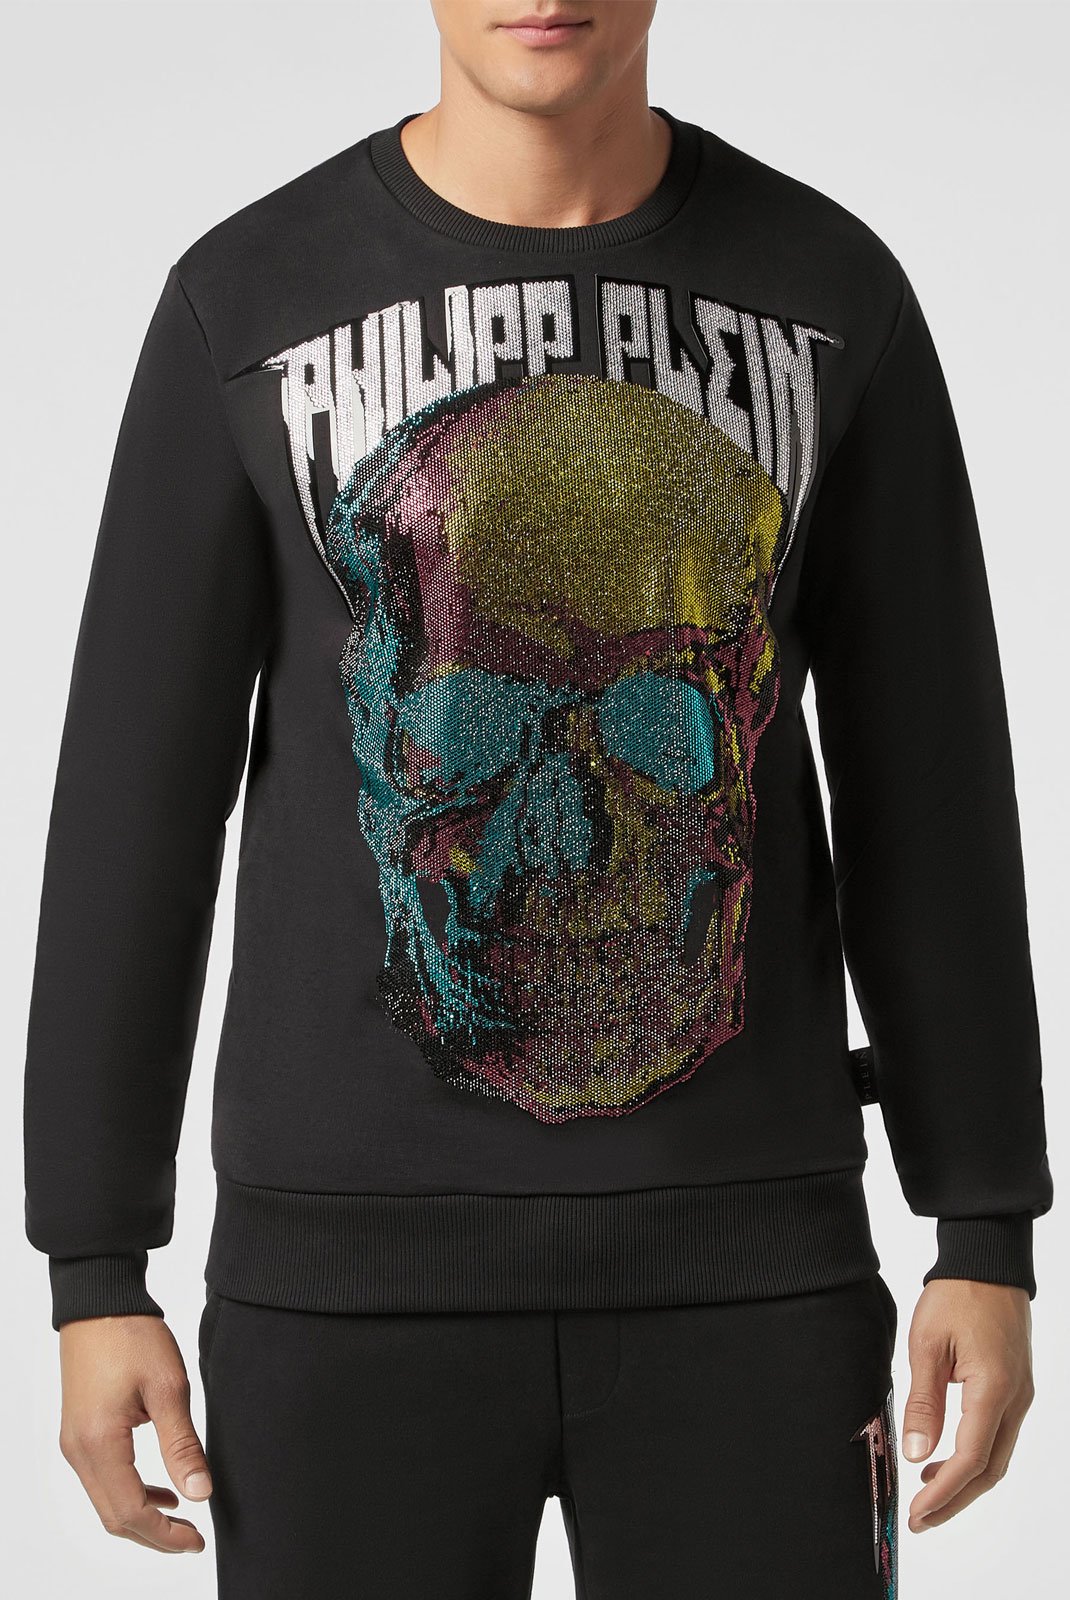 Sweatshirts  Philipp plein MJO0685 02 BLACK